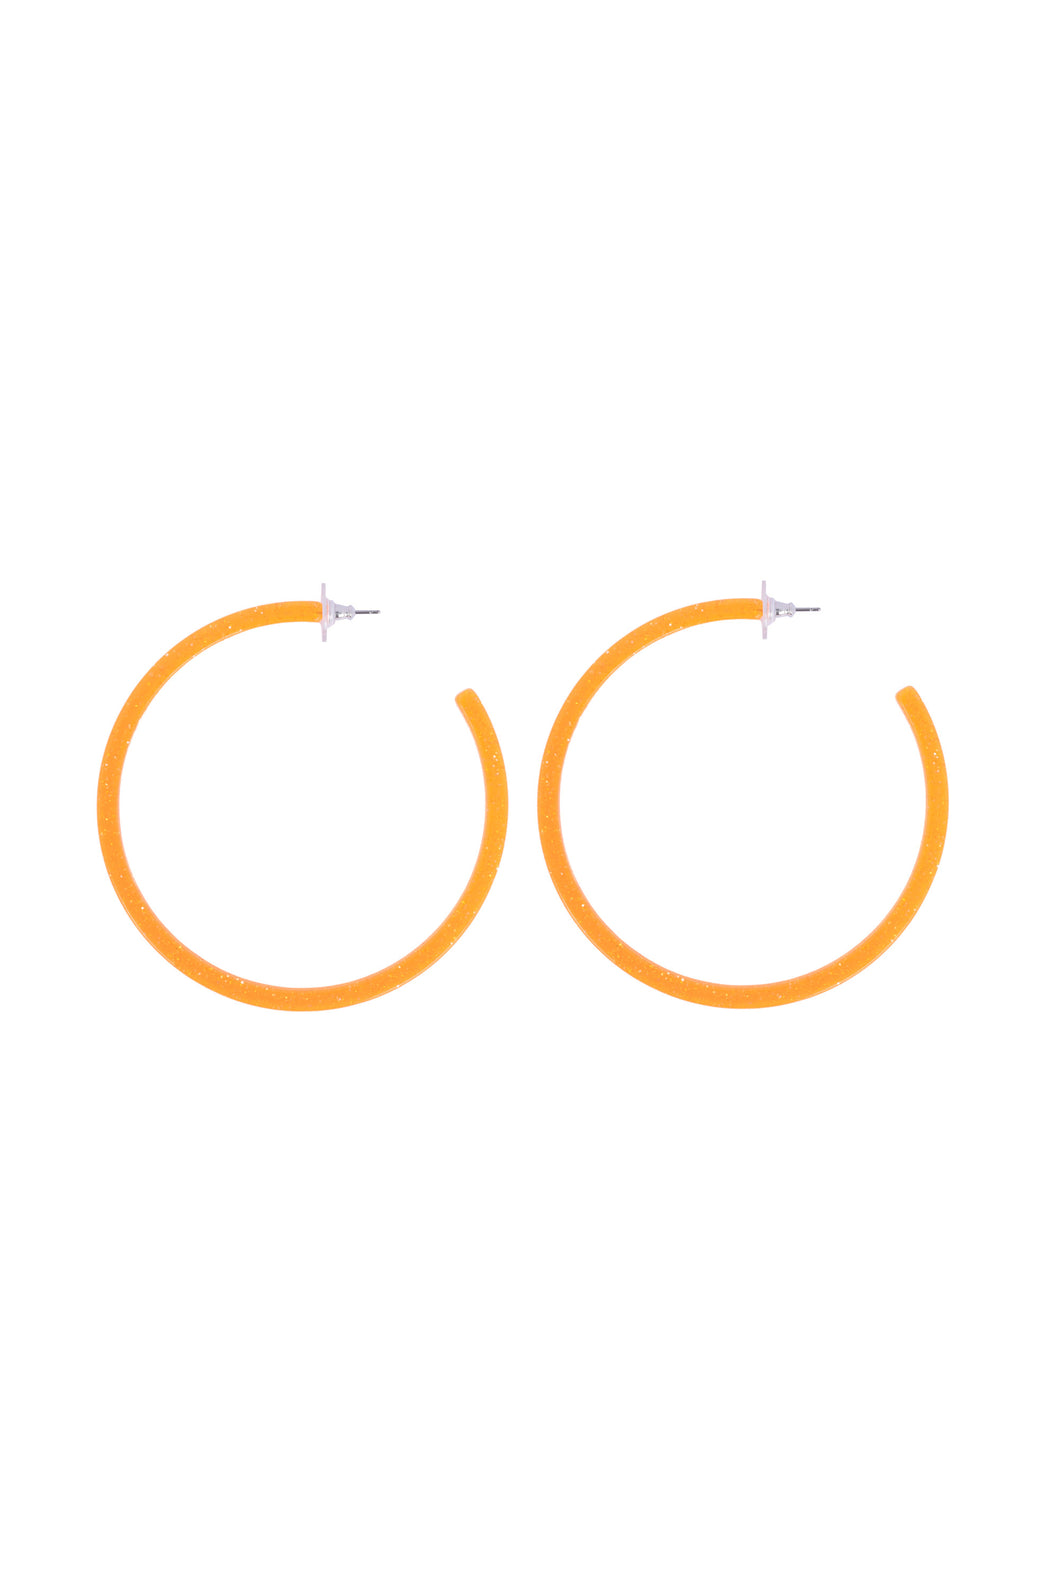 Galaxy Hoops (earrings) Orange